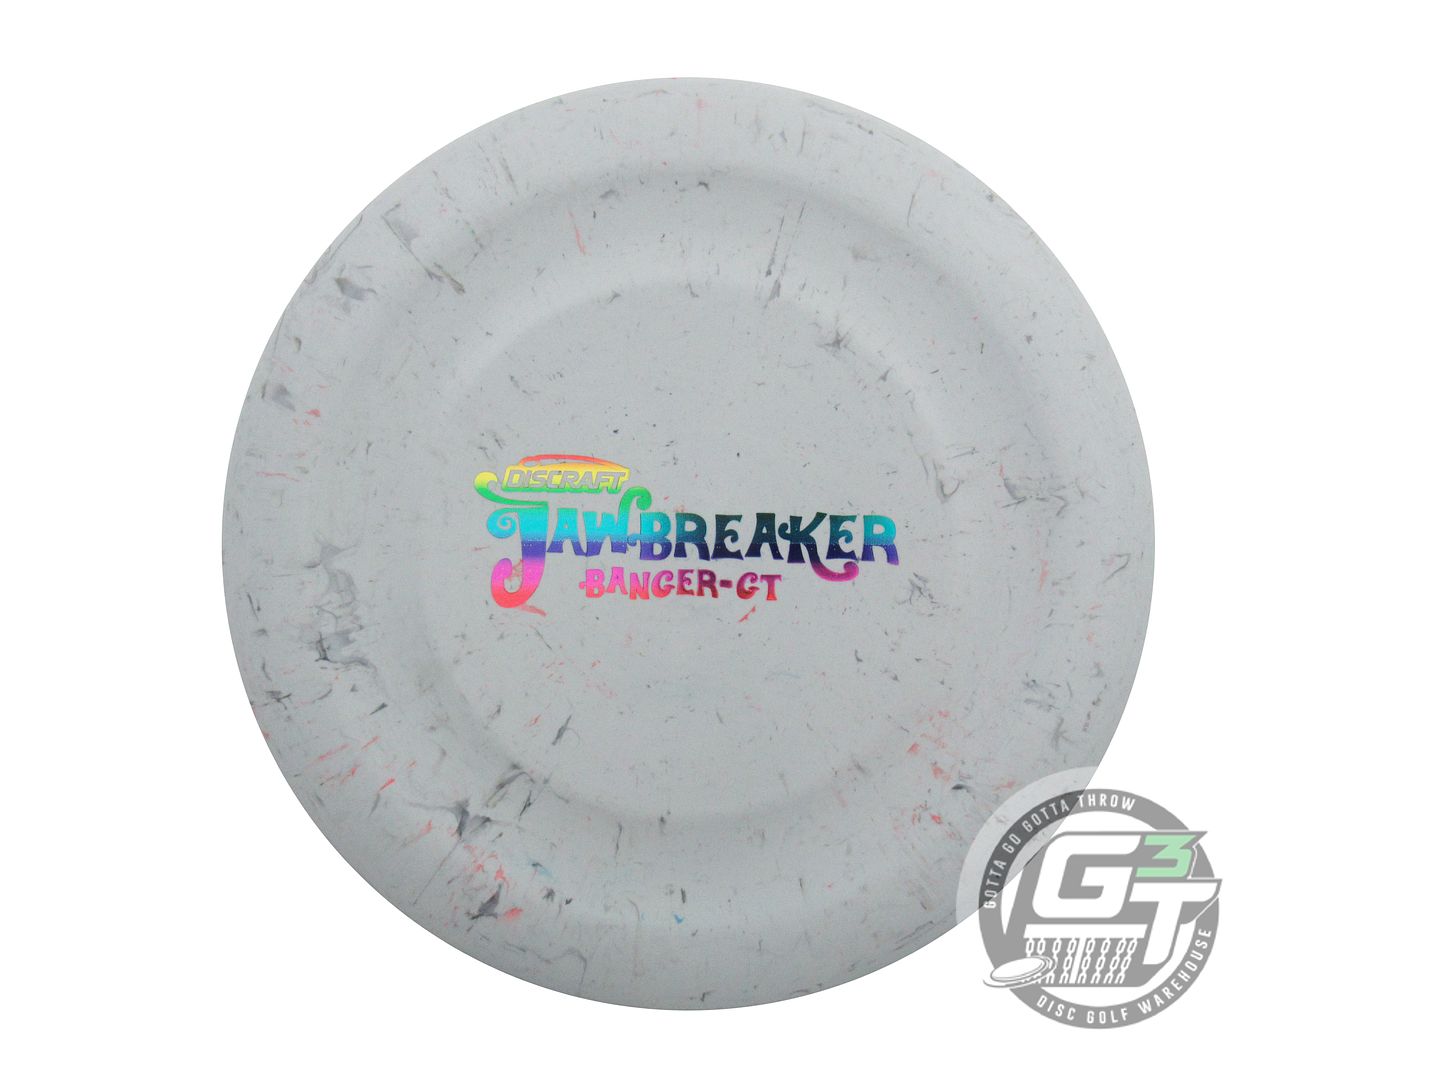 Discraft Jawbreaker Banger GT Putter Golf Disc (Individually Listed)